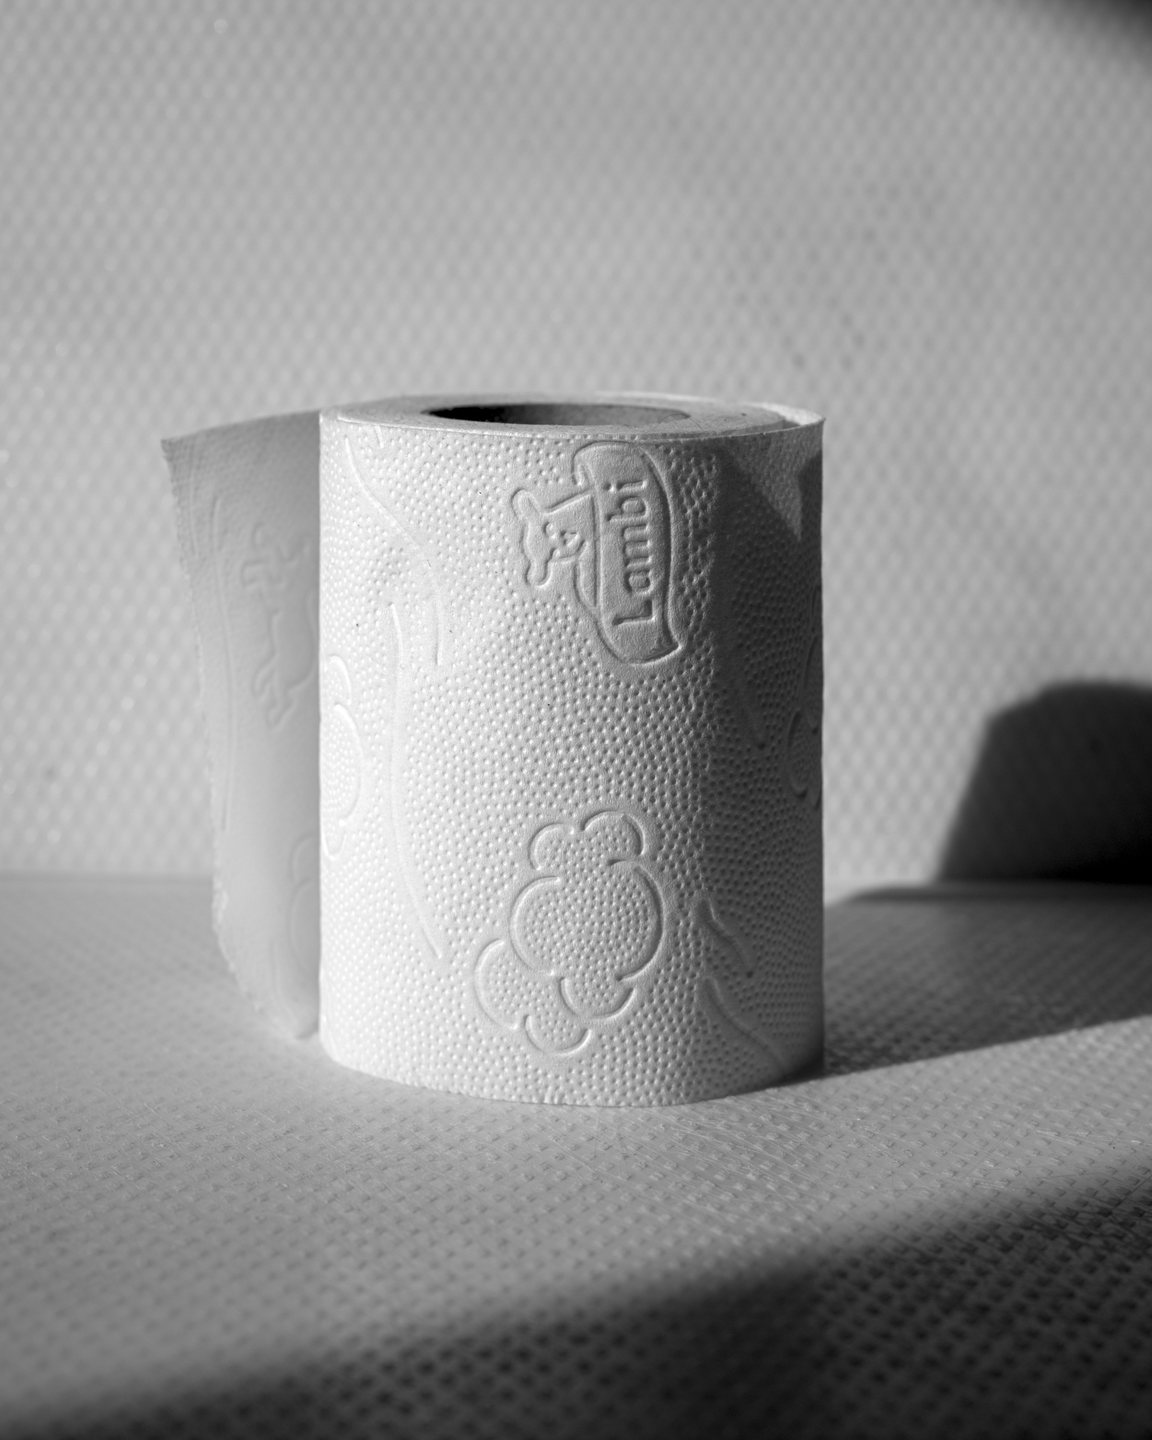 Toilet paper 01